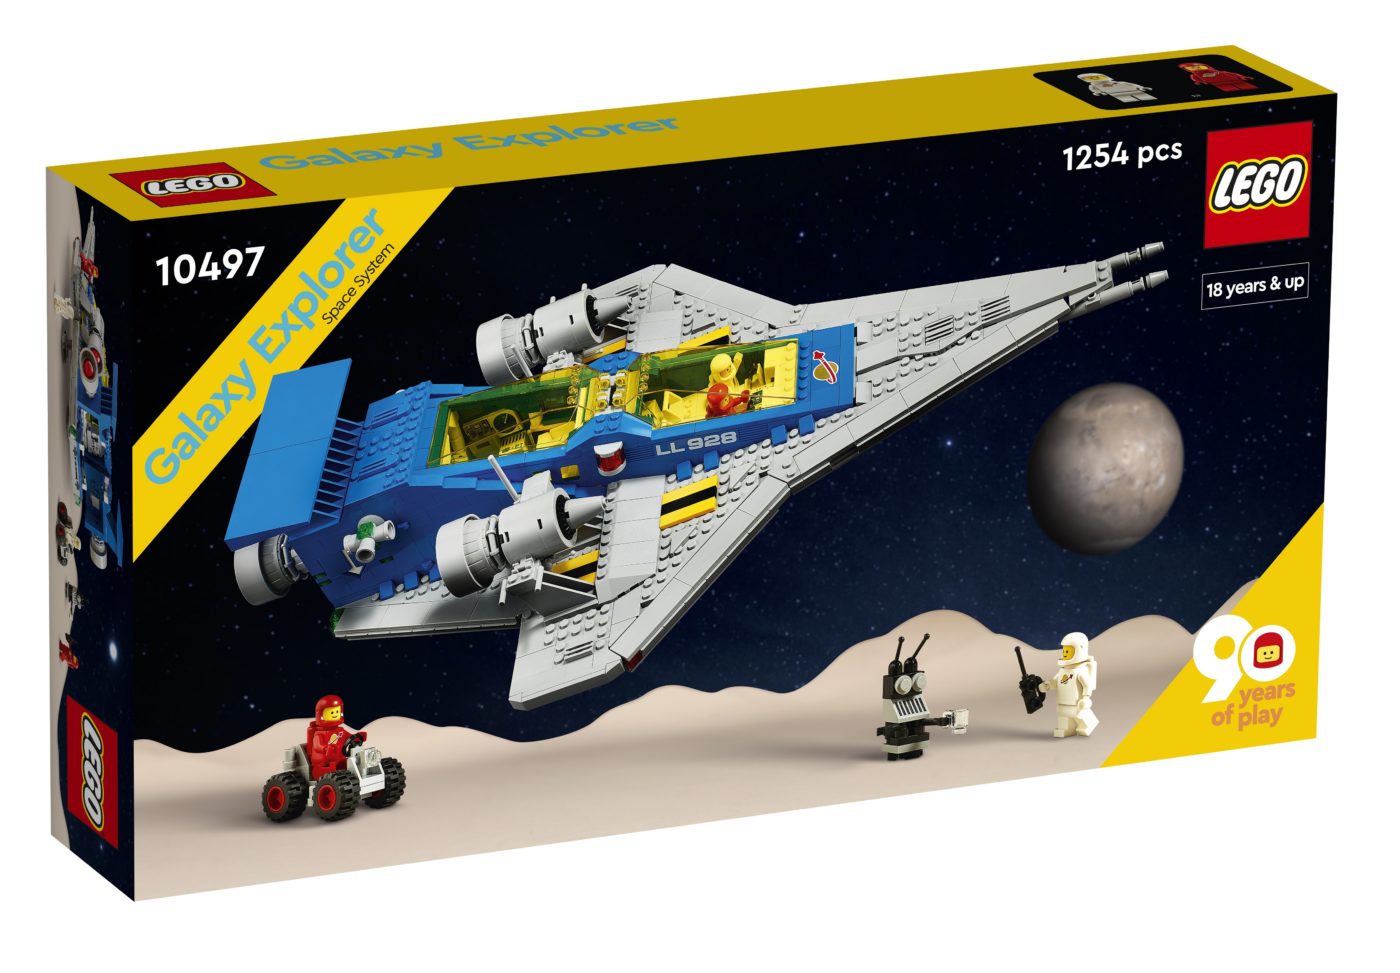 Lego les 90 ans - Page 2 10497-Galaxy-Explorer-Box-1400x973